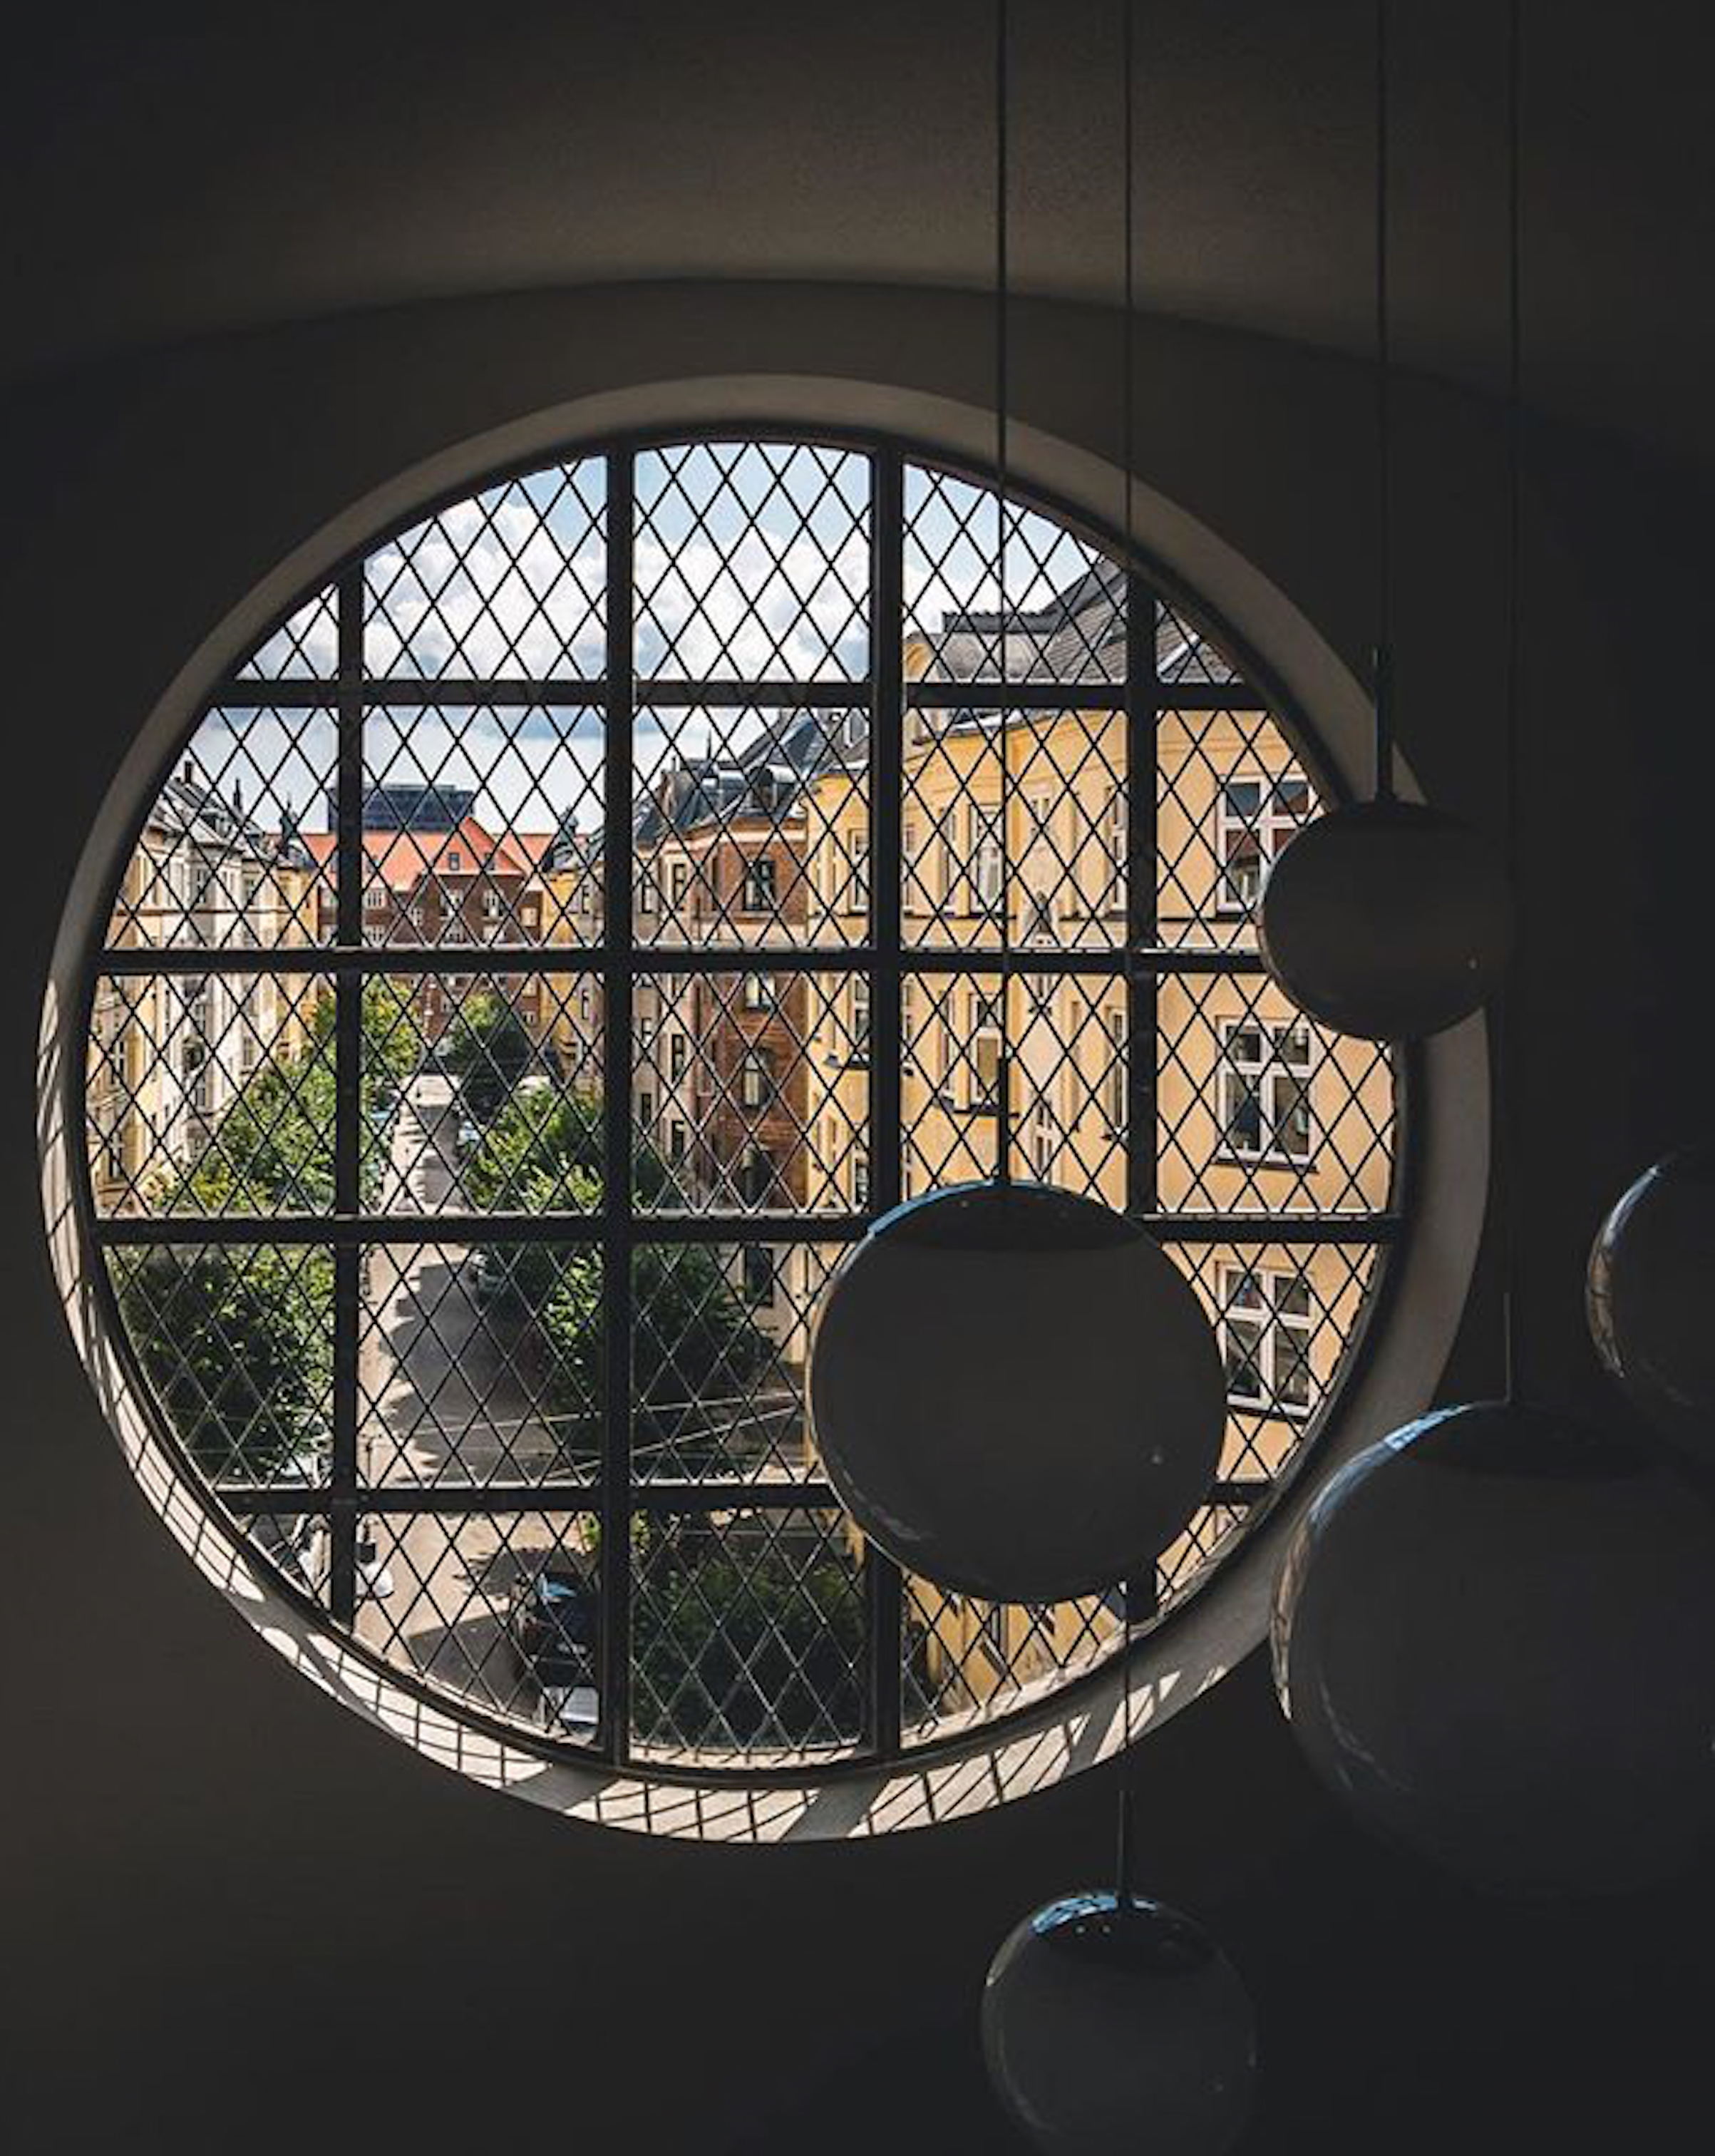 Photo of round window